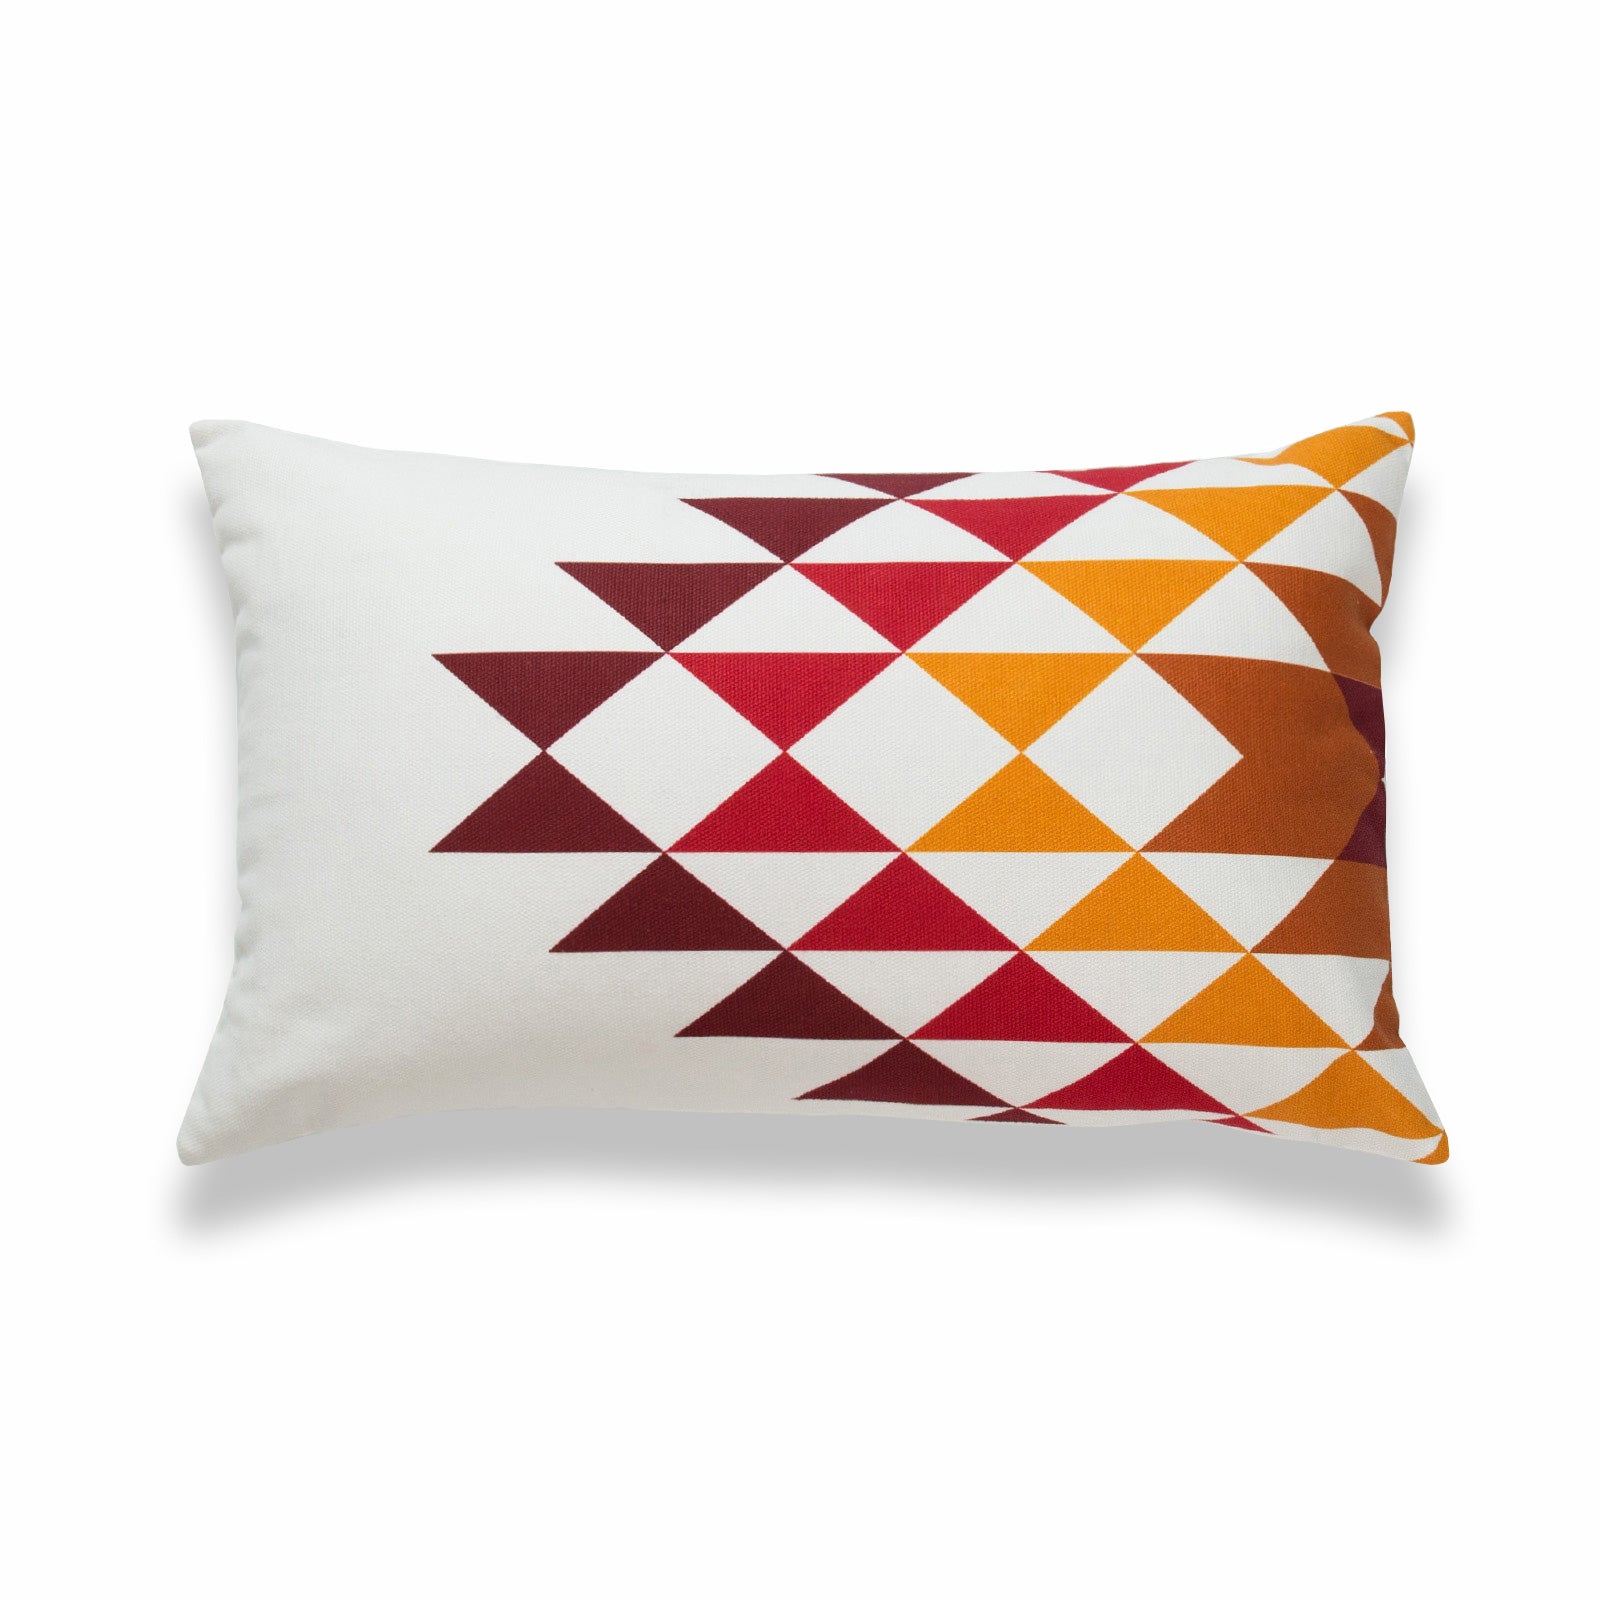 Aztec Print Lumbar Pillow Cover, Diamond, Dark Red Maple Yellow, 12"x20"